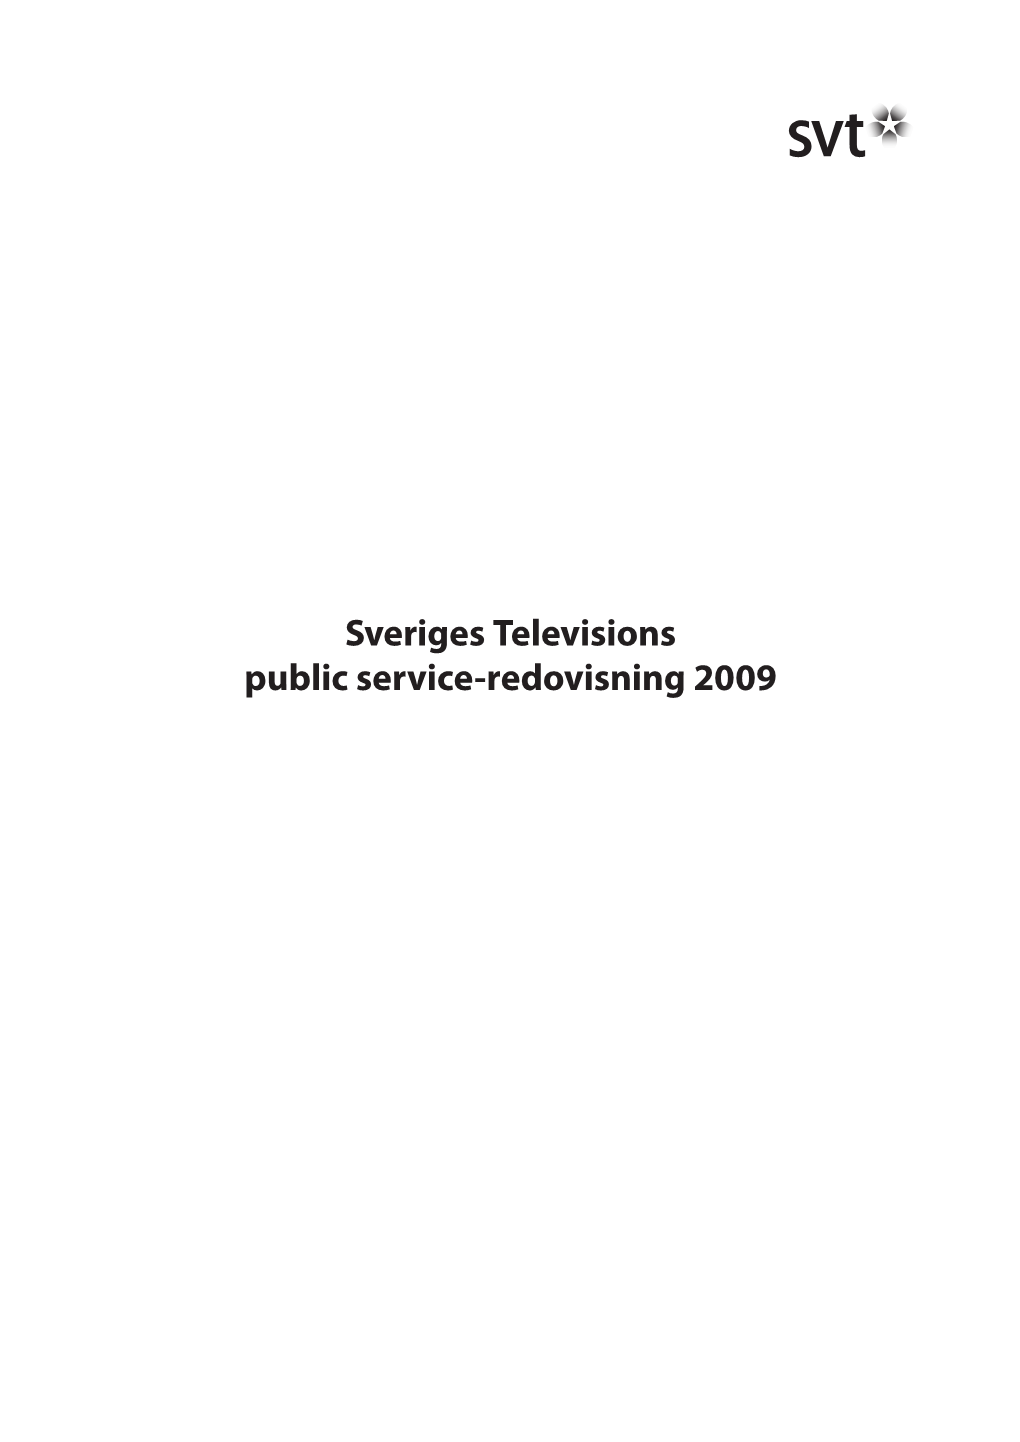 Sveriges Televisions Public Service-Redovisning 2009 © Sveriges Television AB 2010